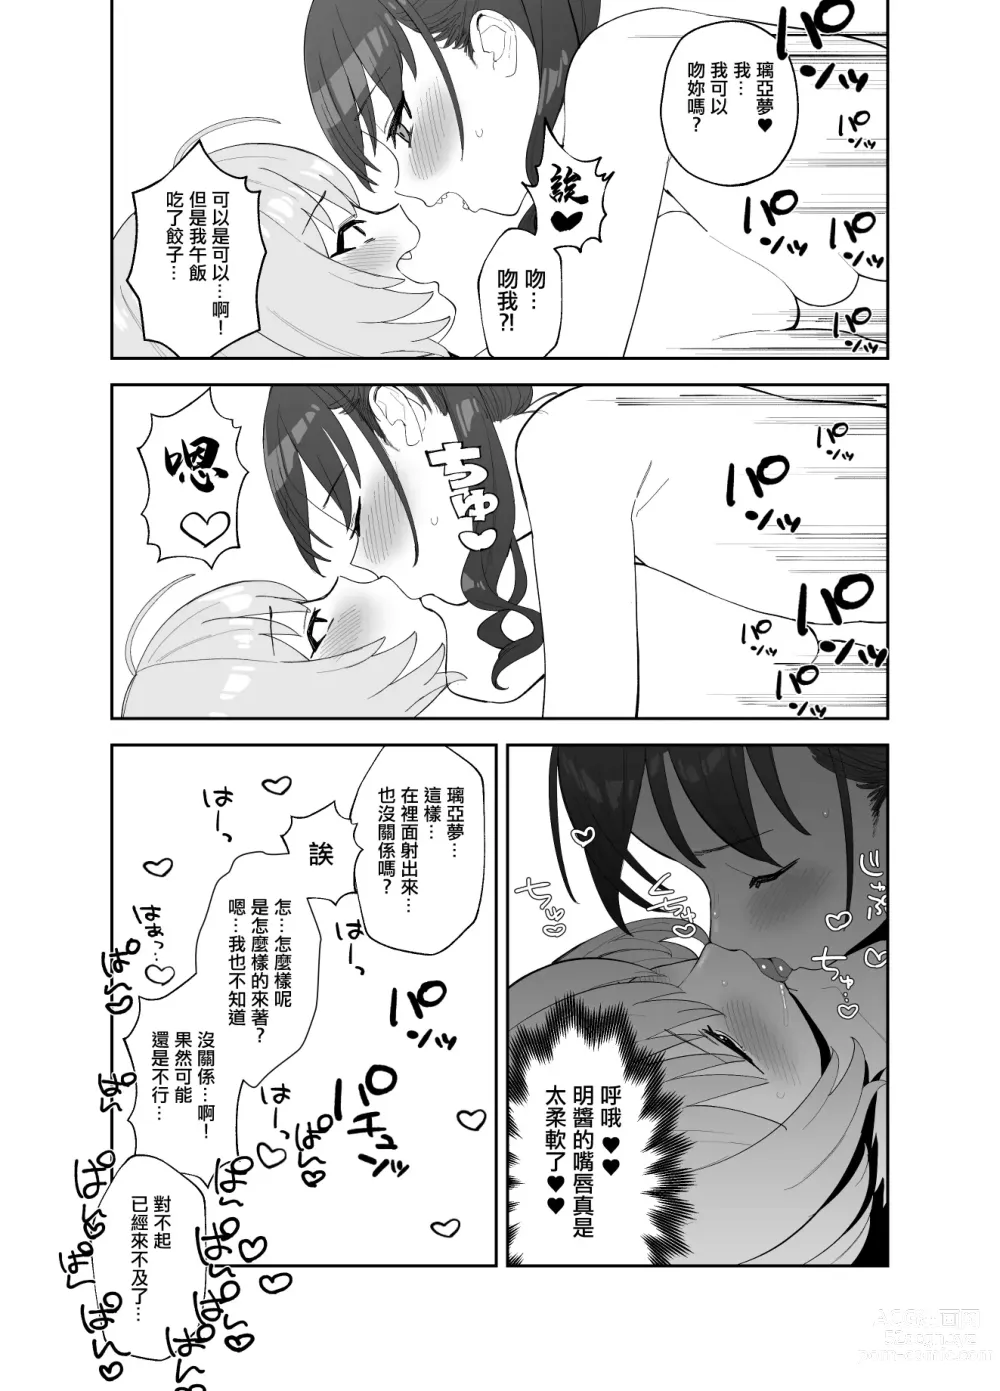 Page 11 of doujinshi 明長出了肉棒與璃亞夢做愛的漫畫